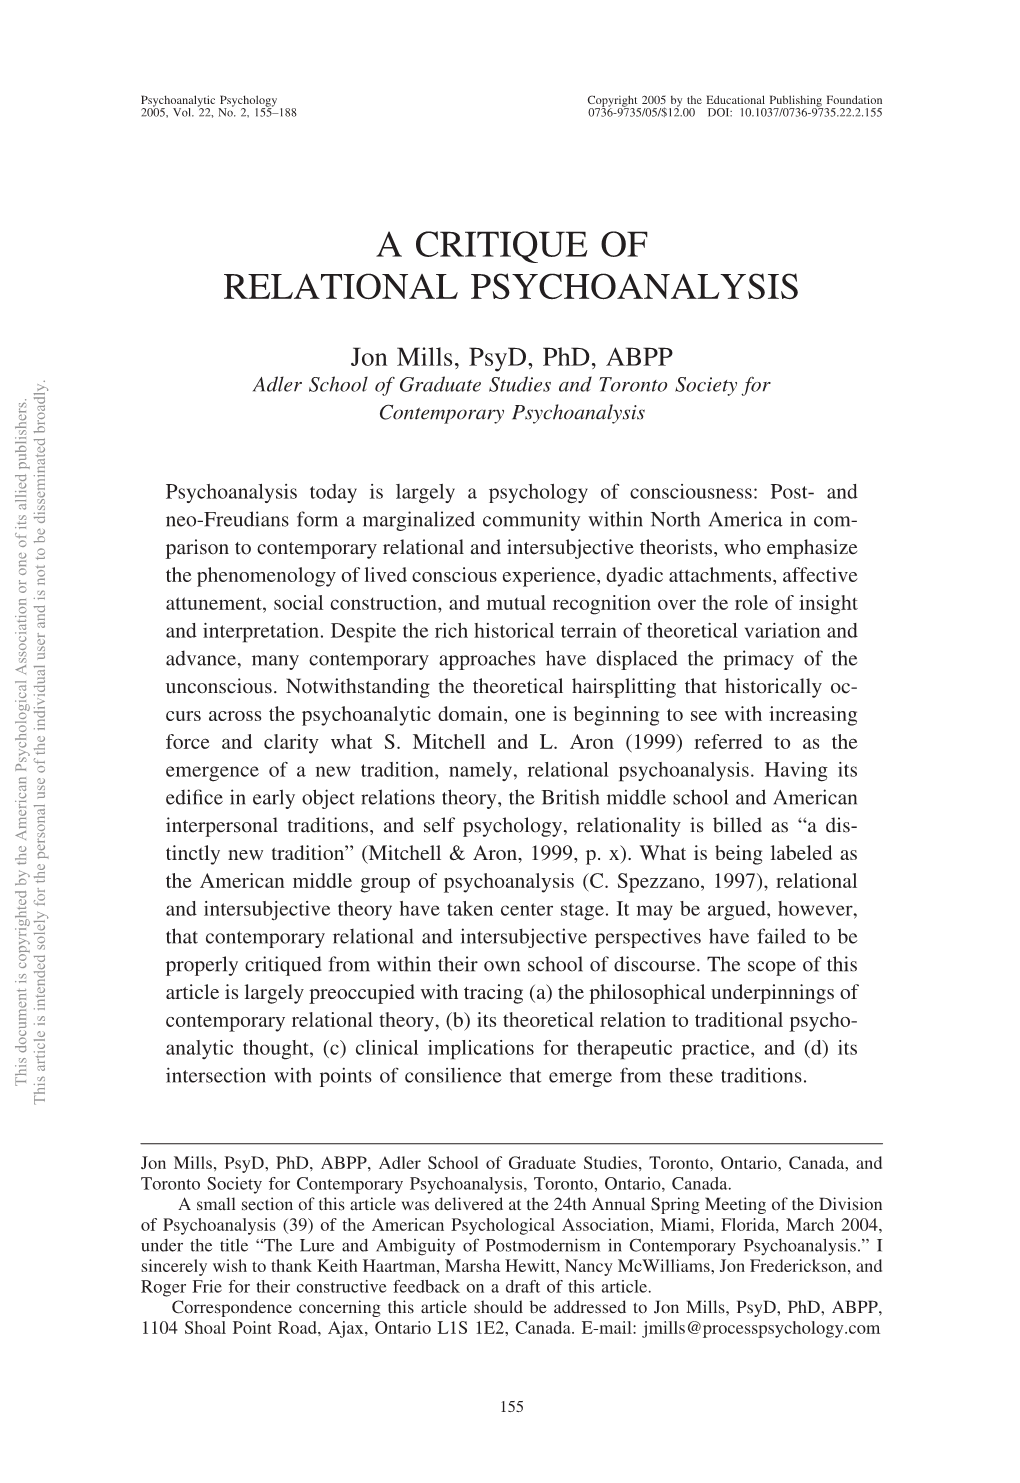 A Critique of Relational Psychoanalysis